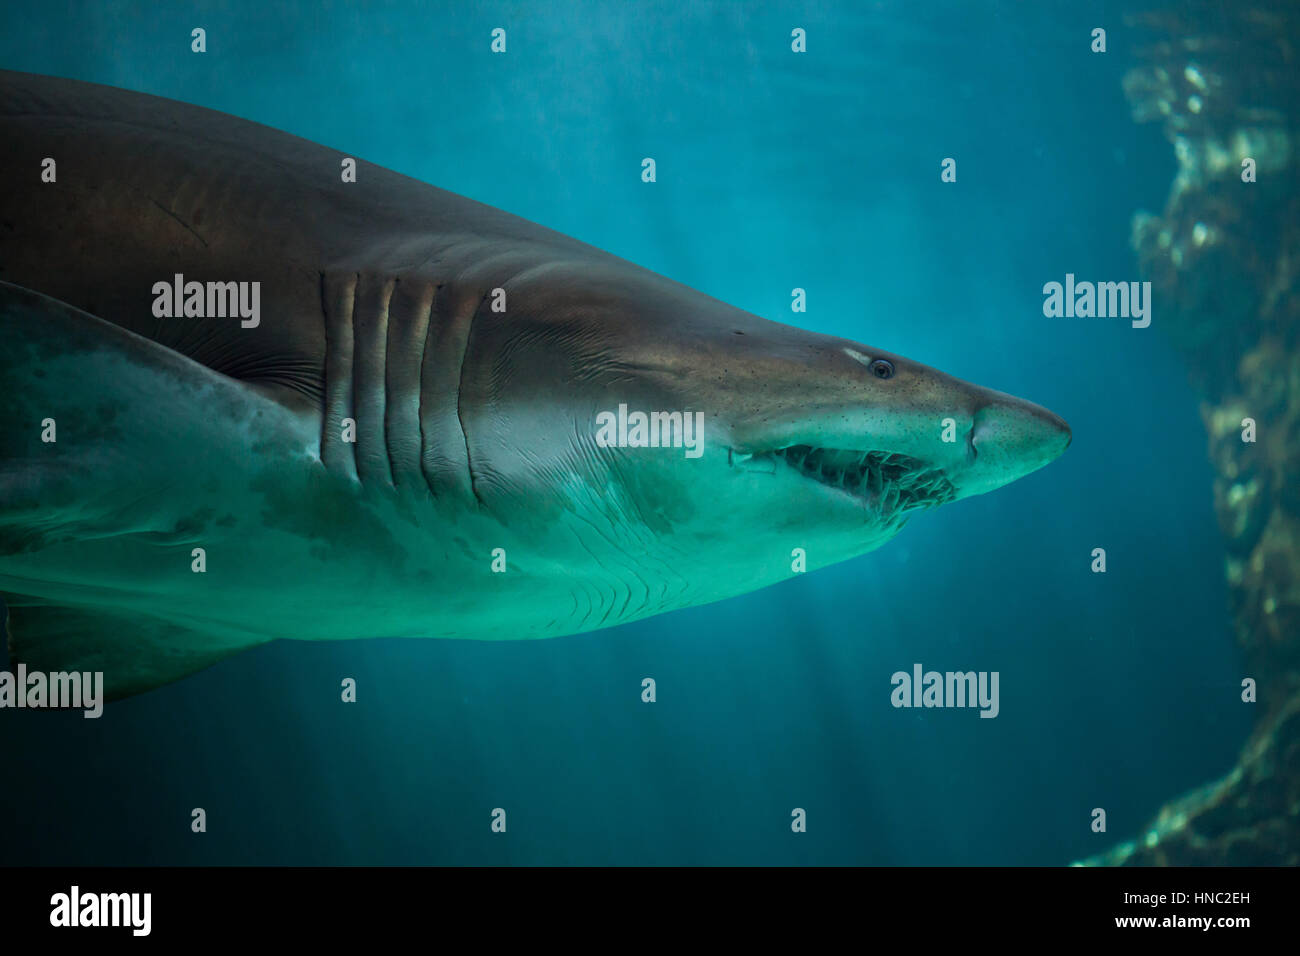 Sand tiger shark (Carcharias taurus), also known as the grey nurse shark. Stock Photo